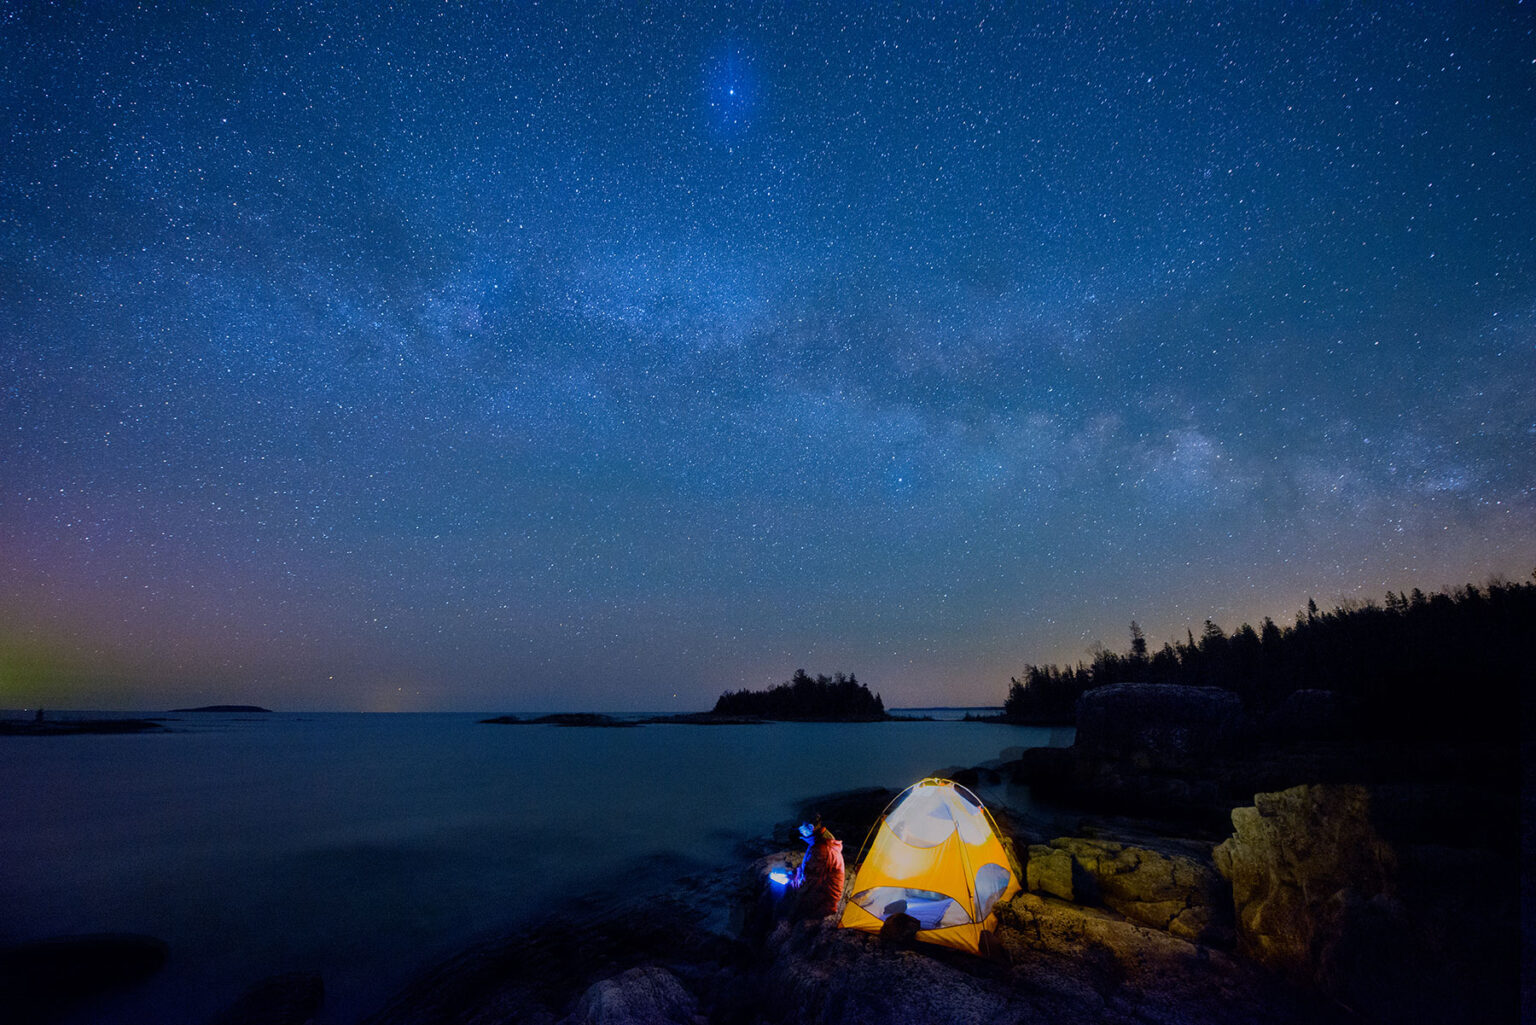 Camping under the dark night sky